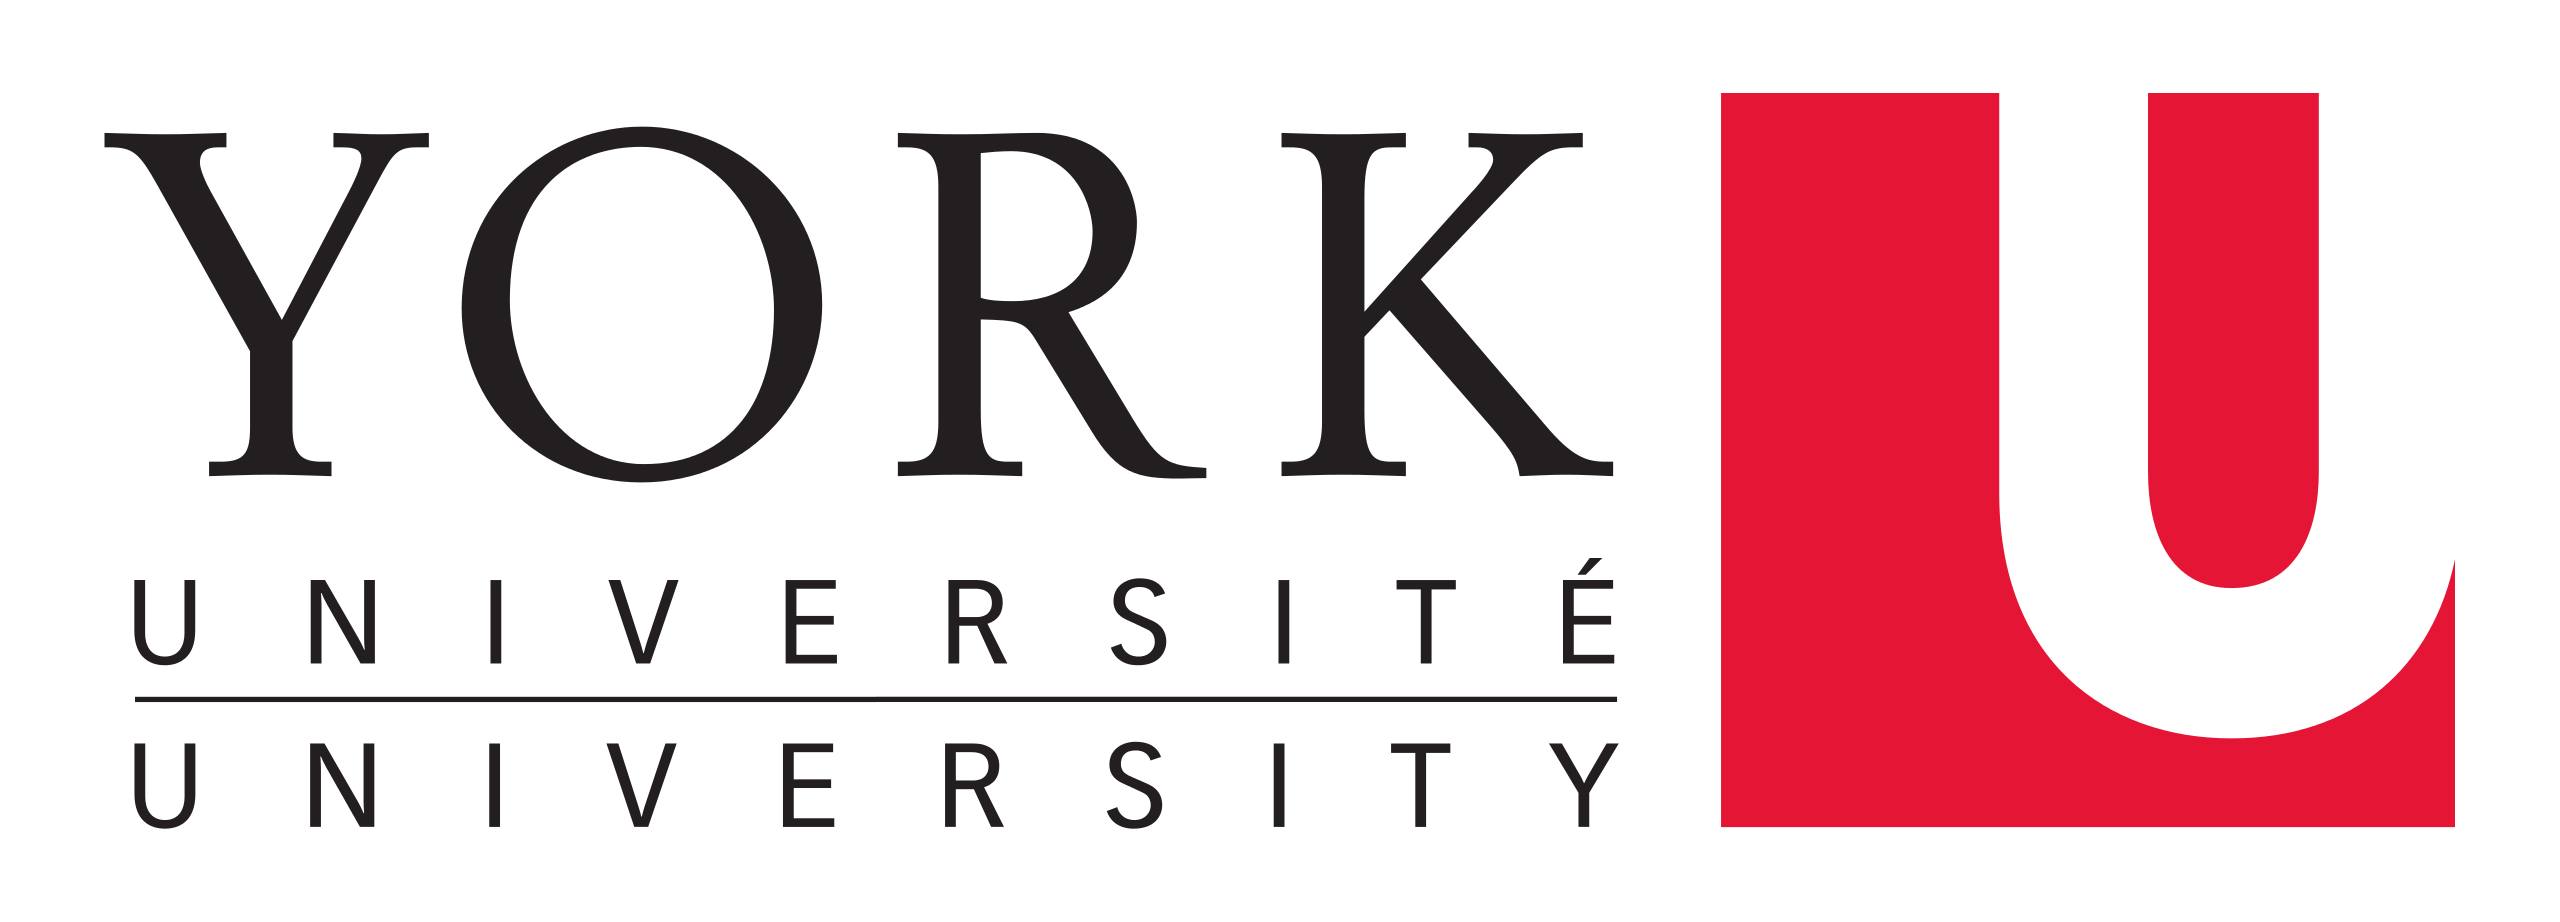 York University image